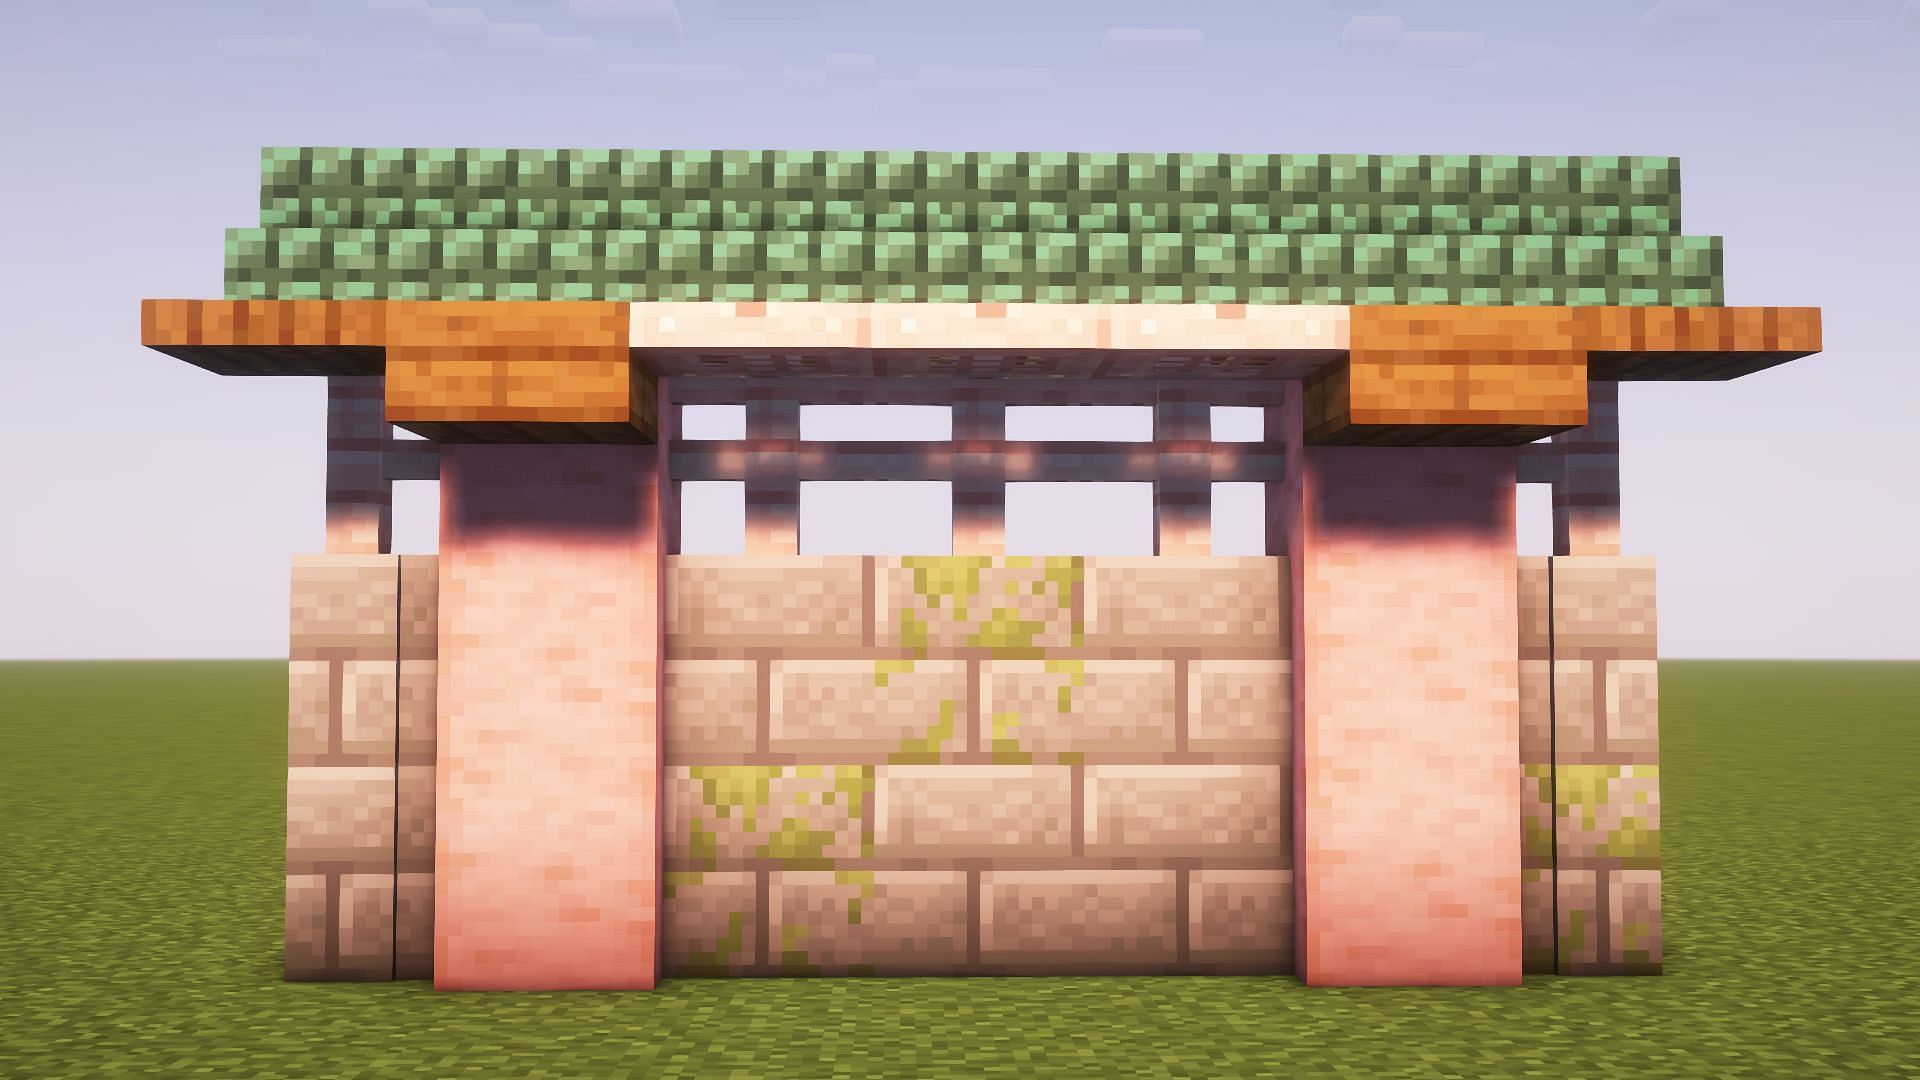 Japanese-style wall in Minecraft (Image via Mojang)